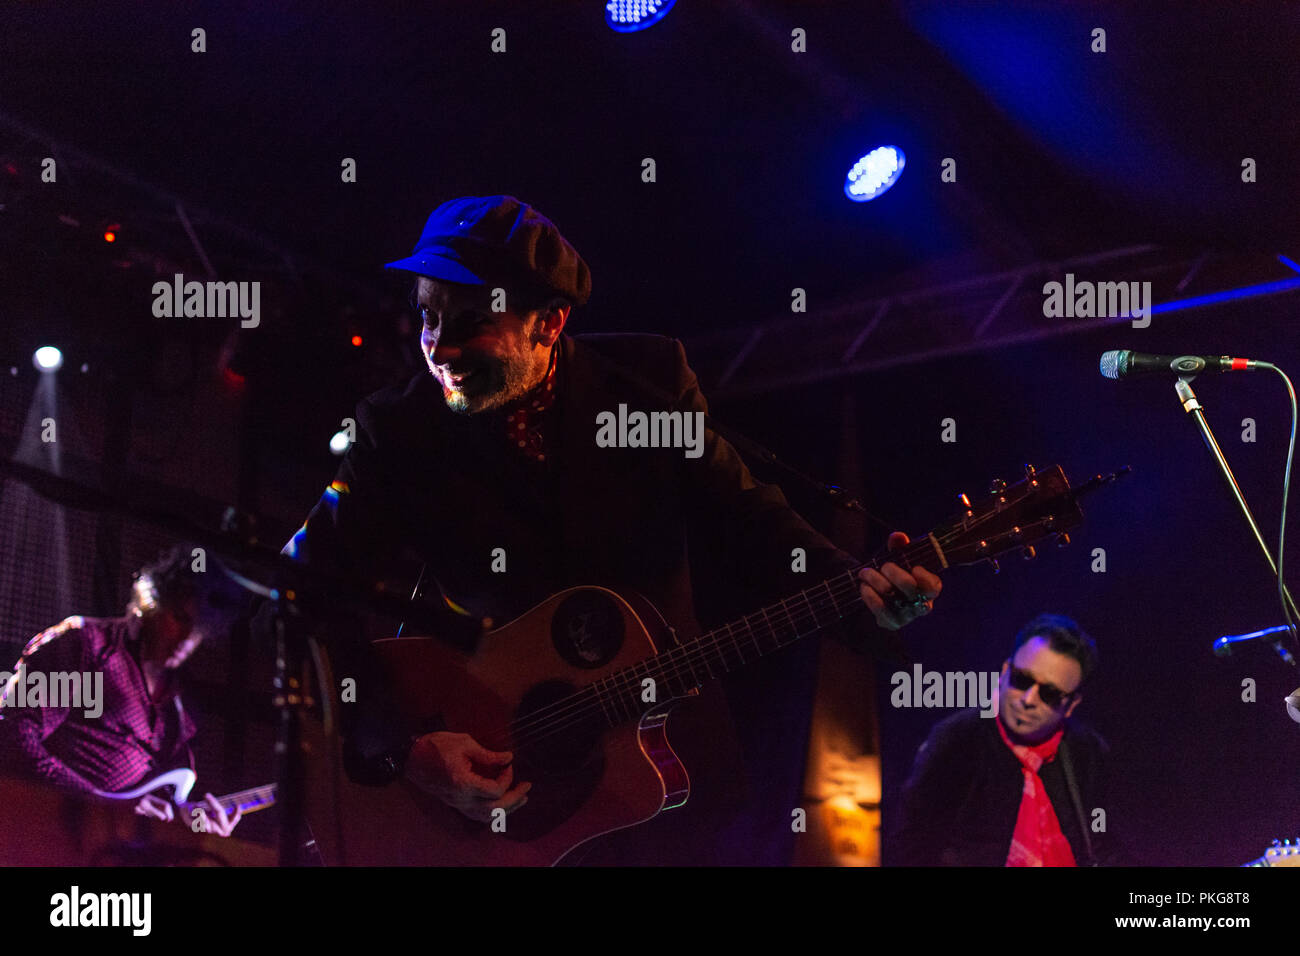 Milan, Italy - September 12, 2018: American indie rock band Mercury Rev performs at Serraglio Music Club. Brambilla Simone Live News photographer Credit: Simone Brambilla/Alamy Live News Stock Photo